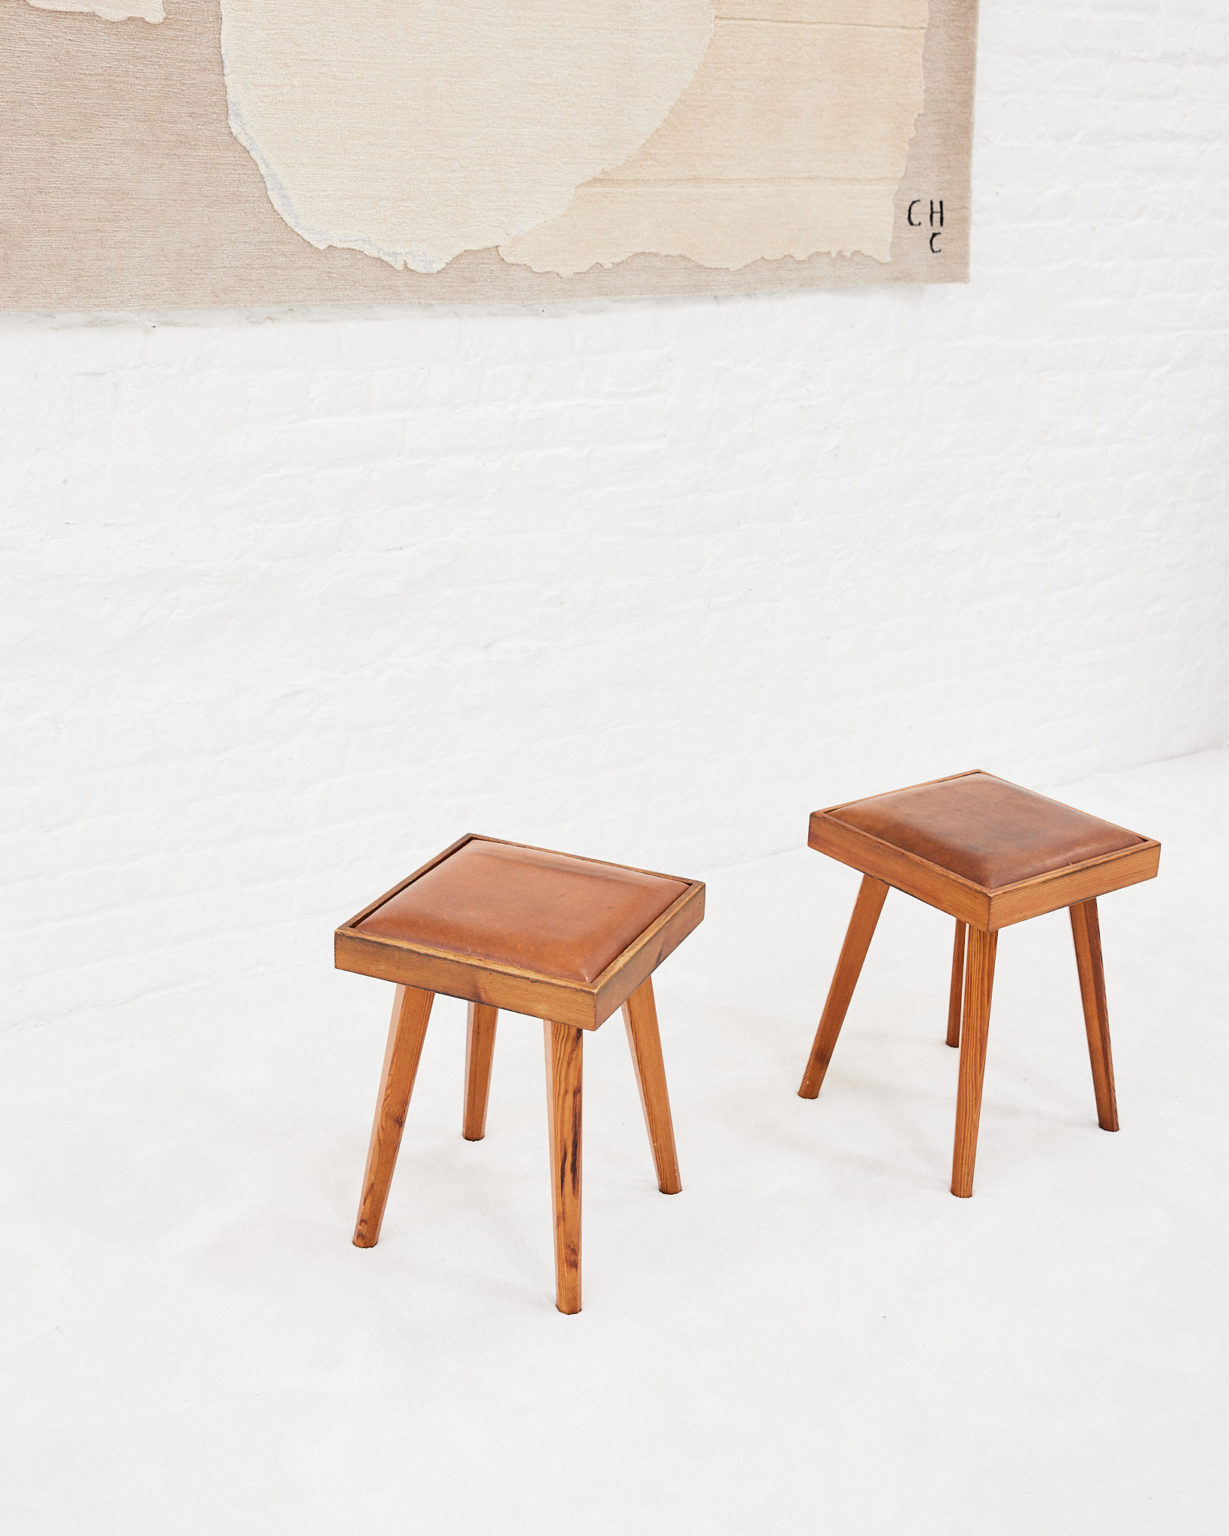 Pierre Chapo style pair of stools